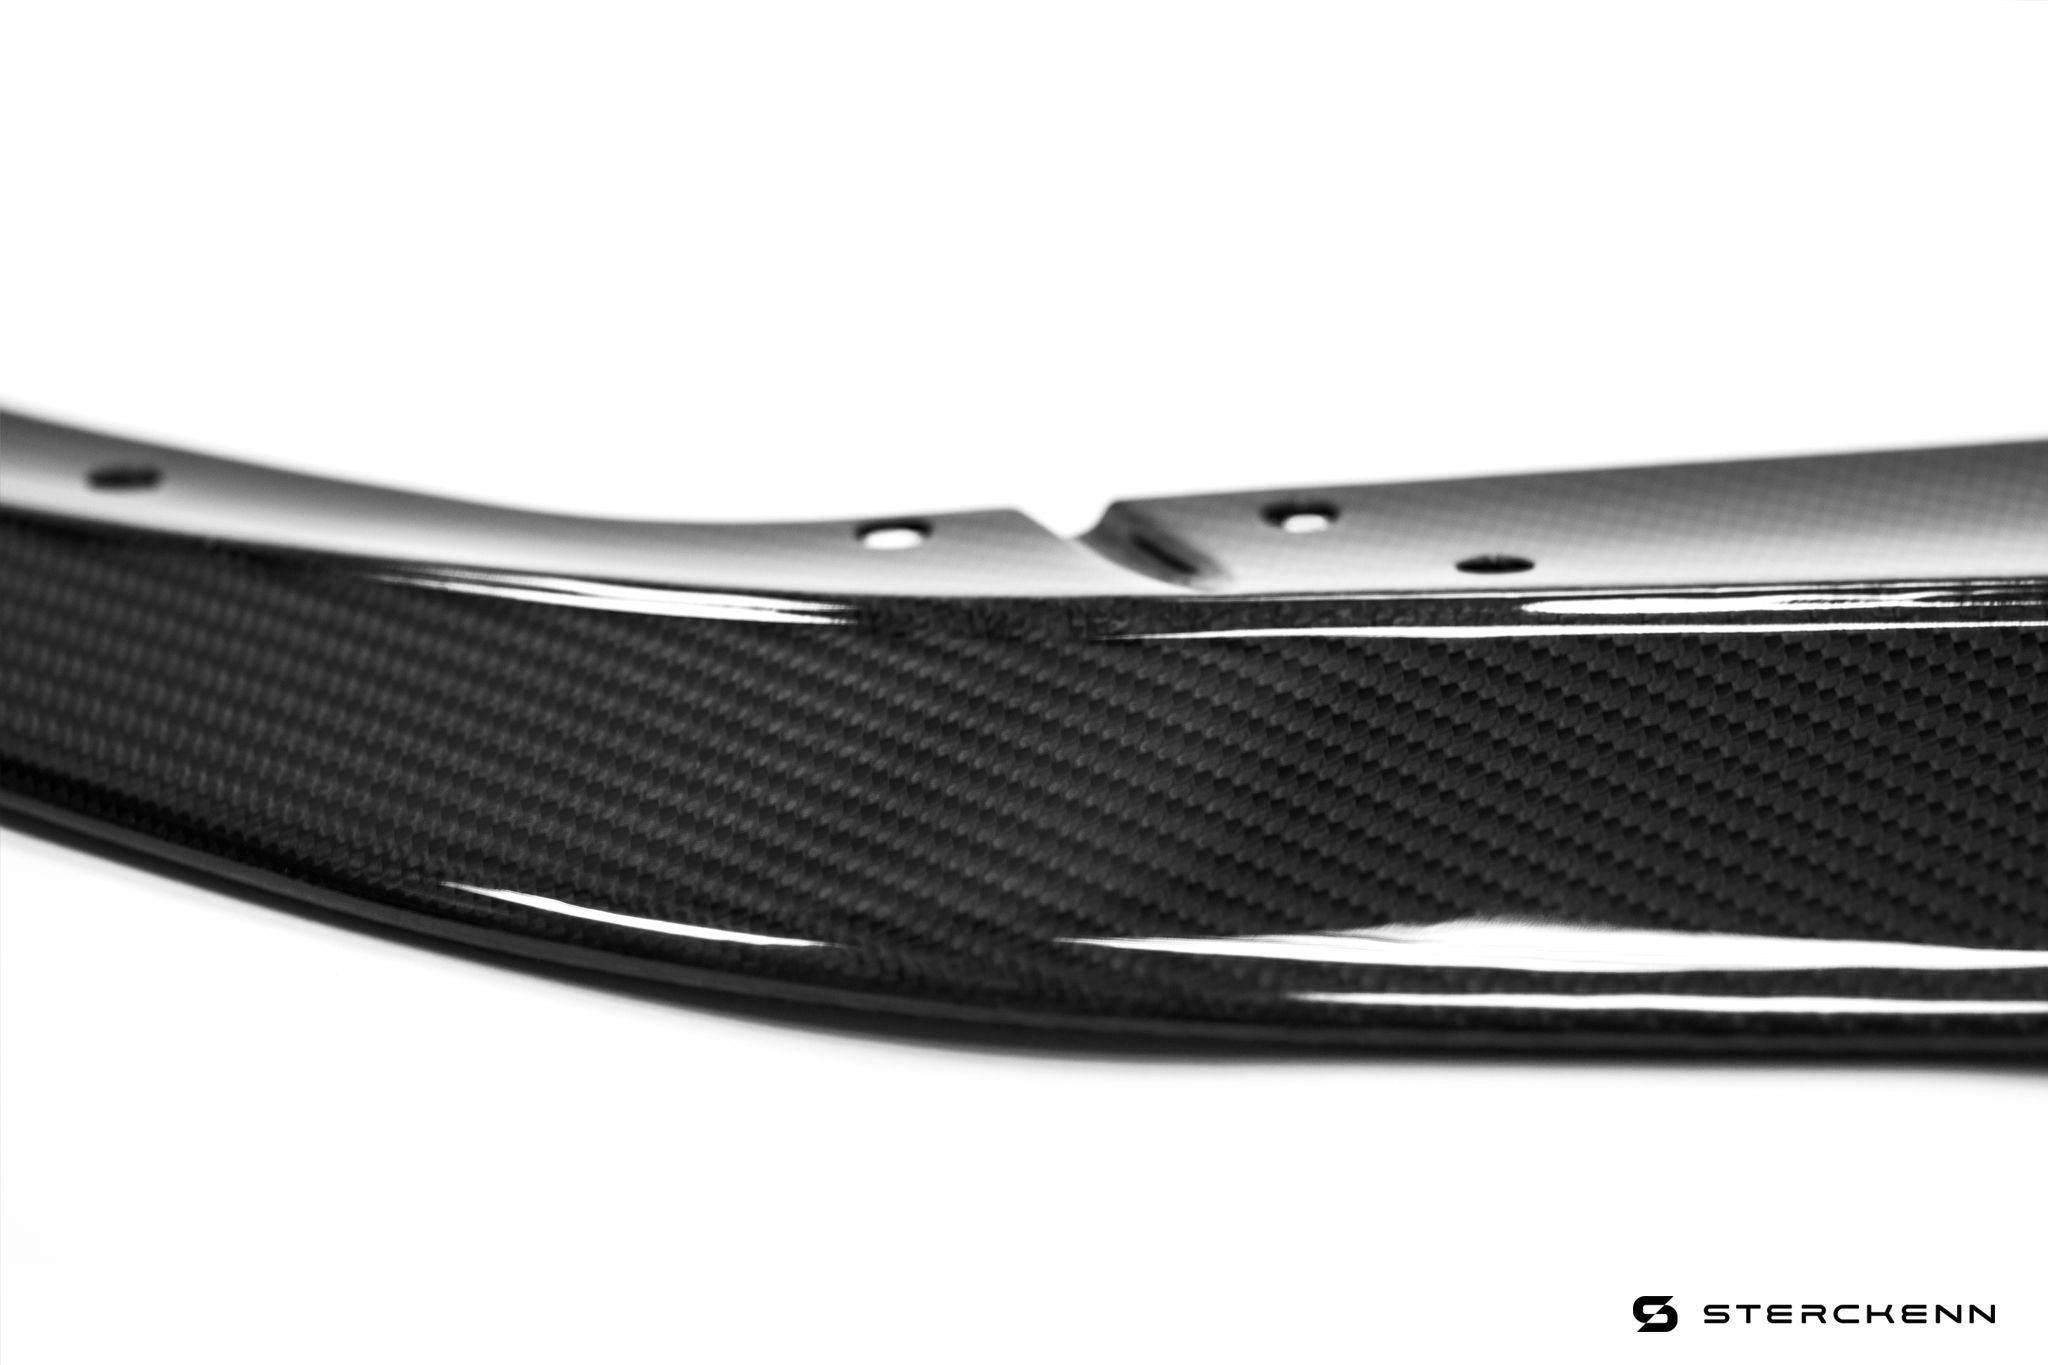 51 Universal Racing Car Rear Trunk Spoiler Wing Lid Carbon Fiber Look RS  Style 